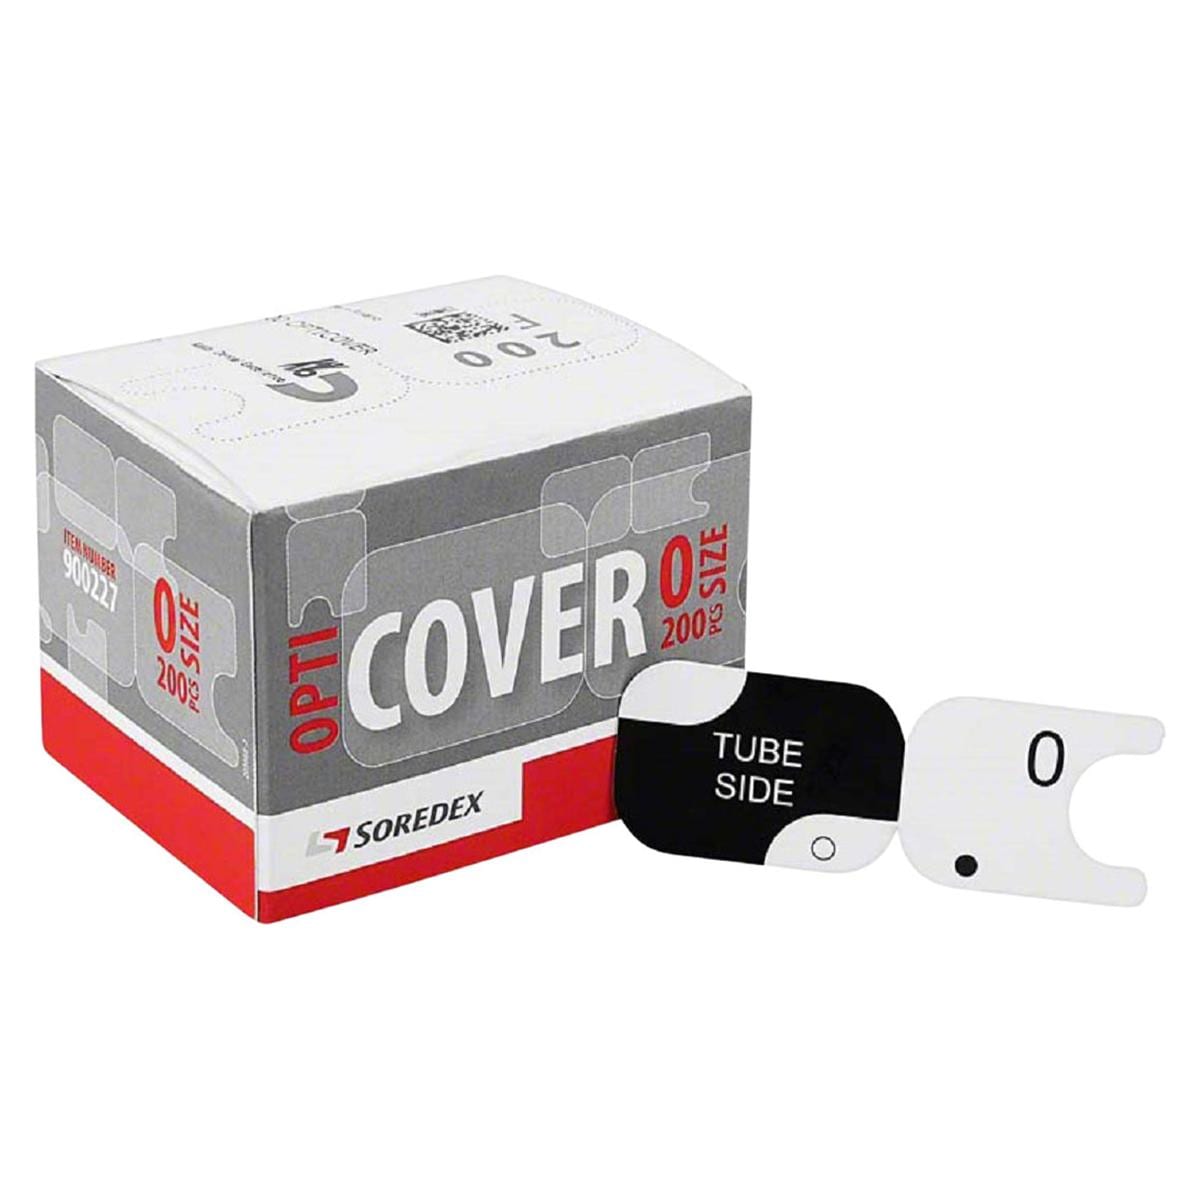 Opticover protection en carton - Taille 2 (3 x 4 cm), 200 pcs